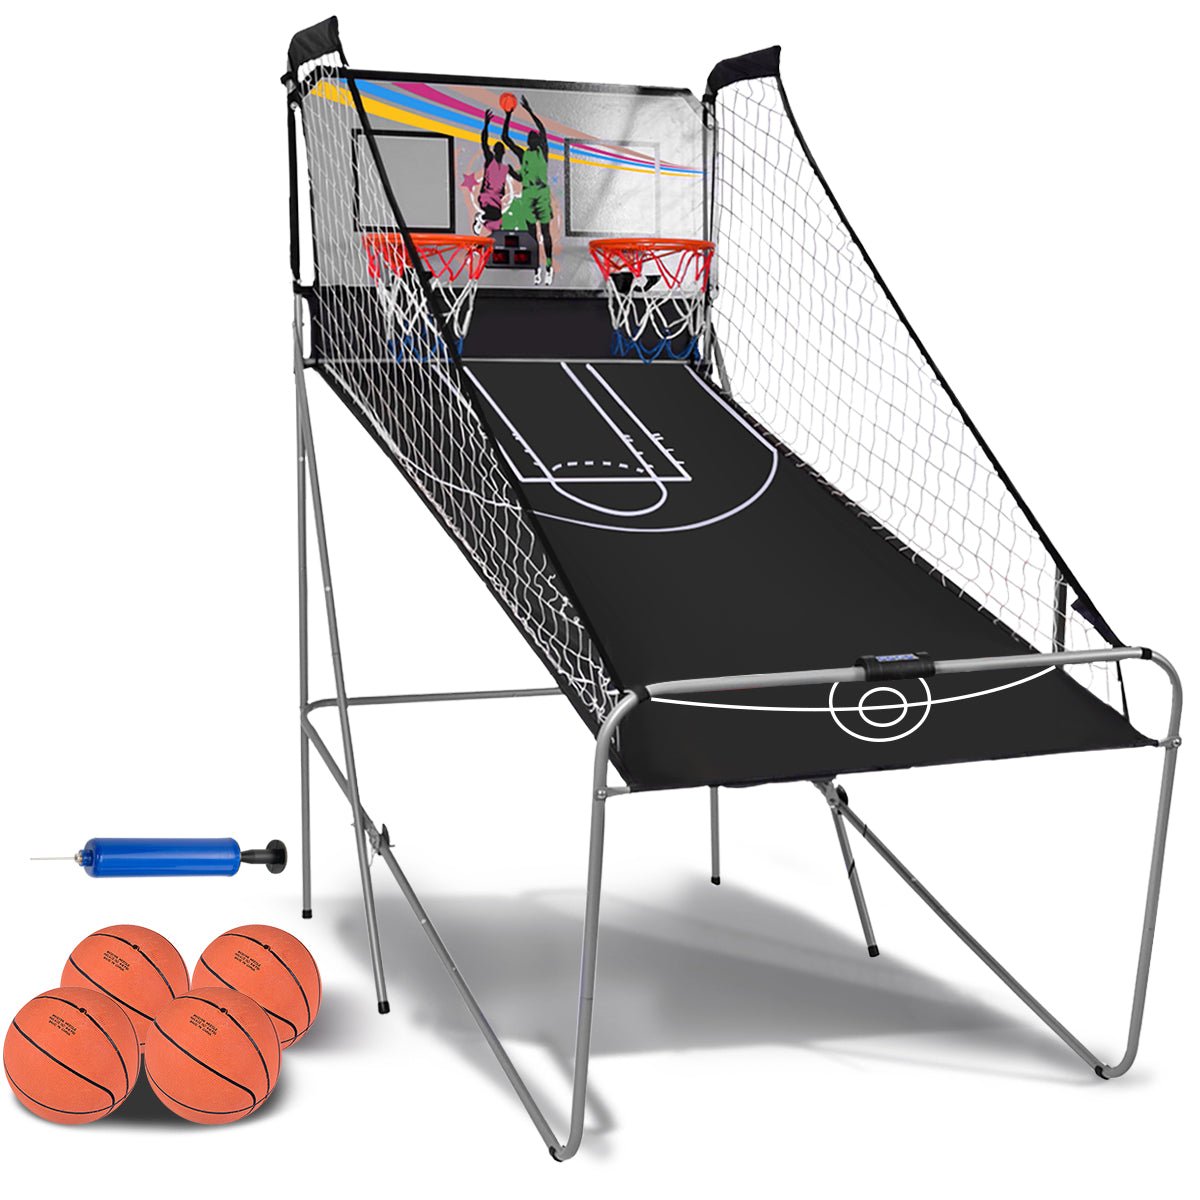 Shop the 8-in-1 Electronic Basketball Hoop Arcade Game at Kids Mega Mart